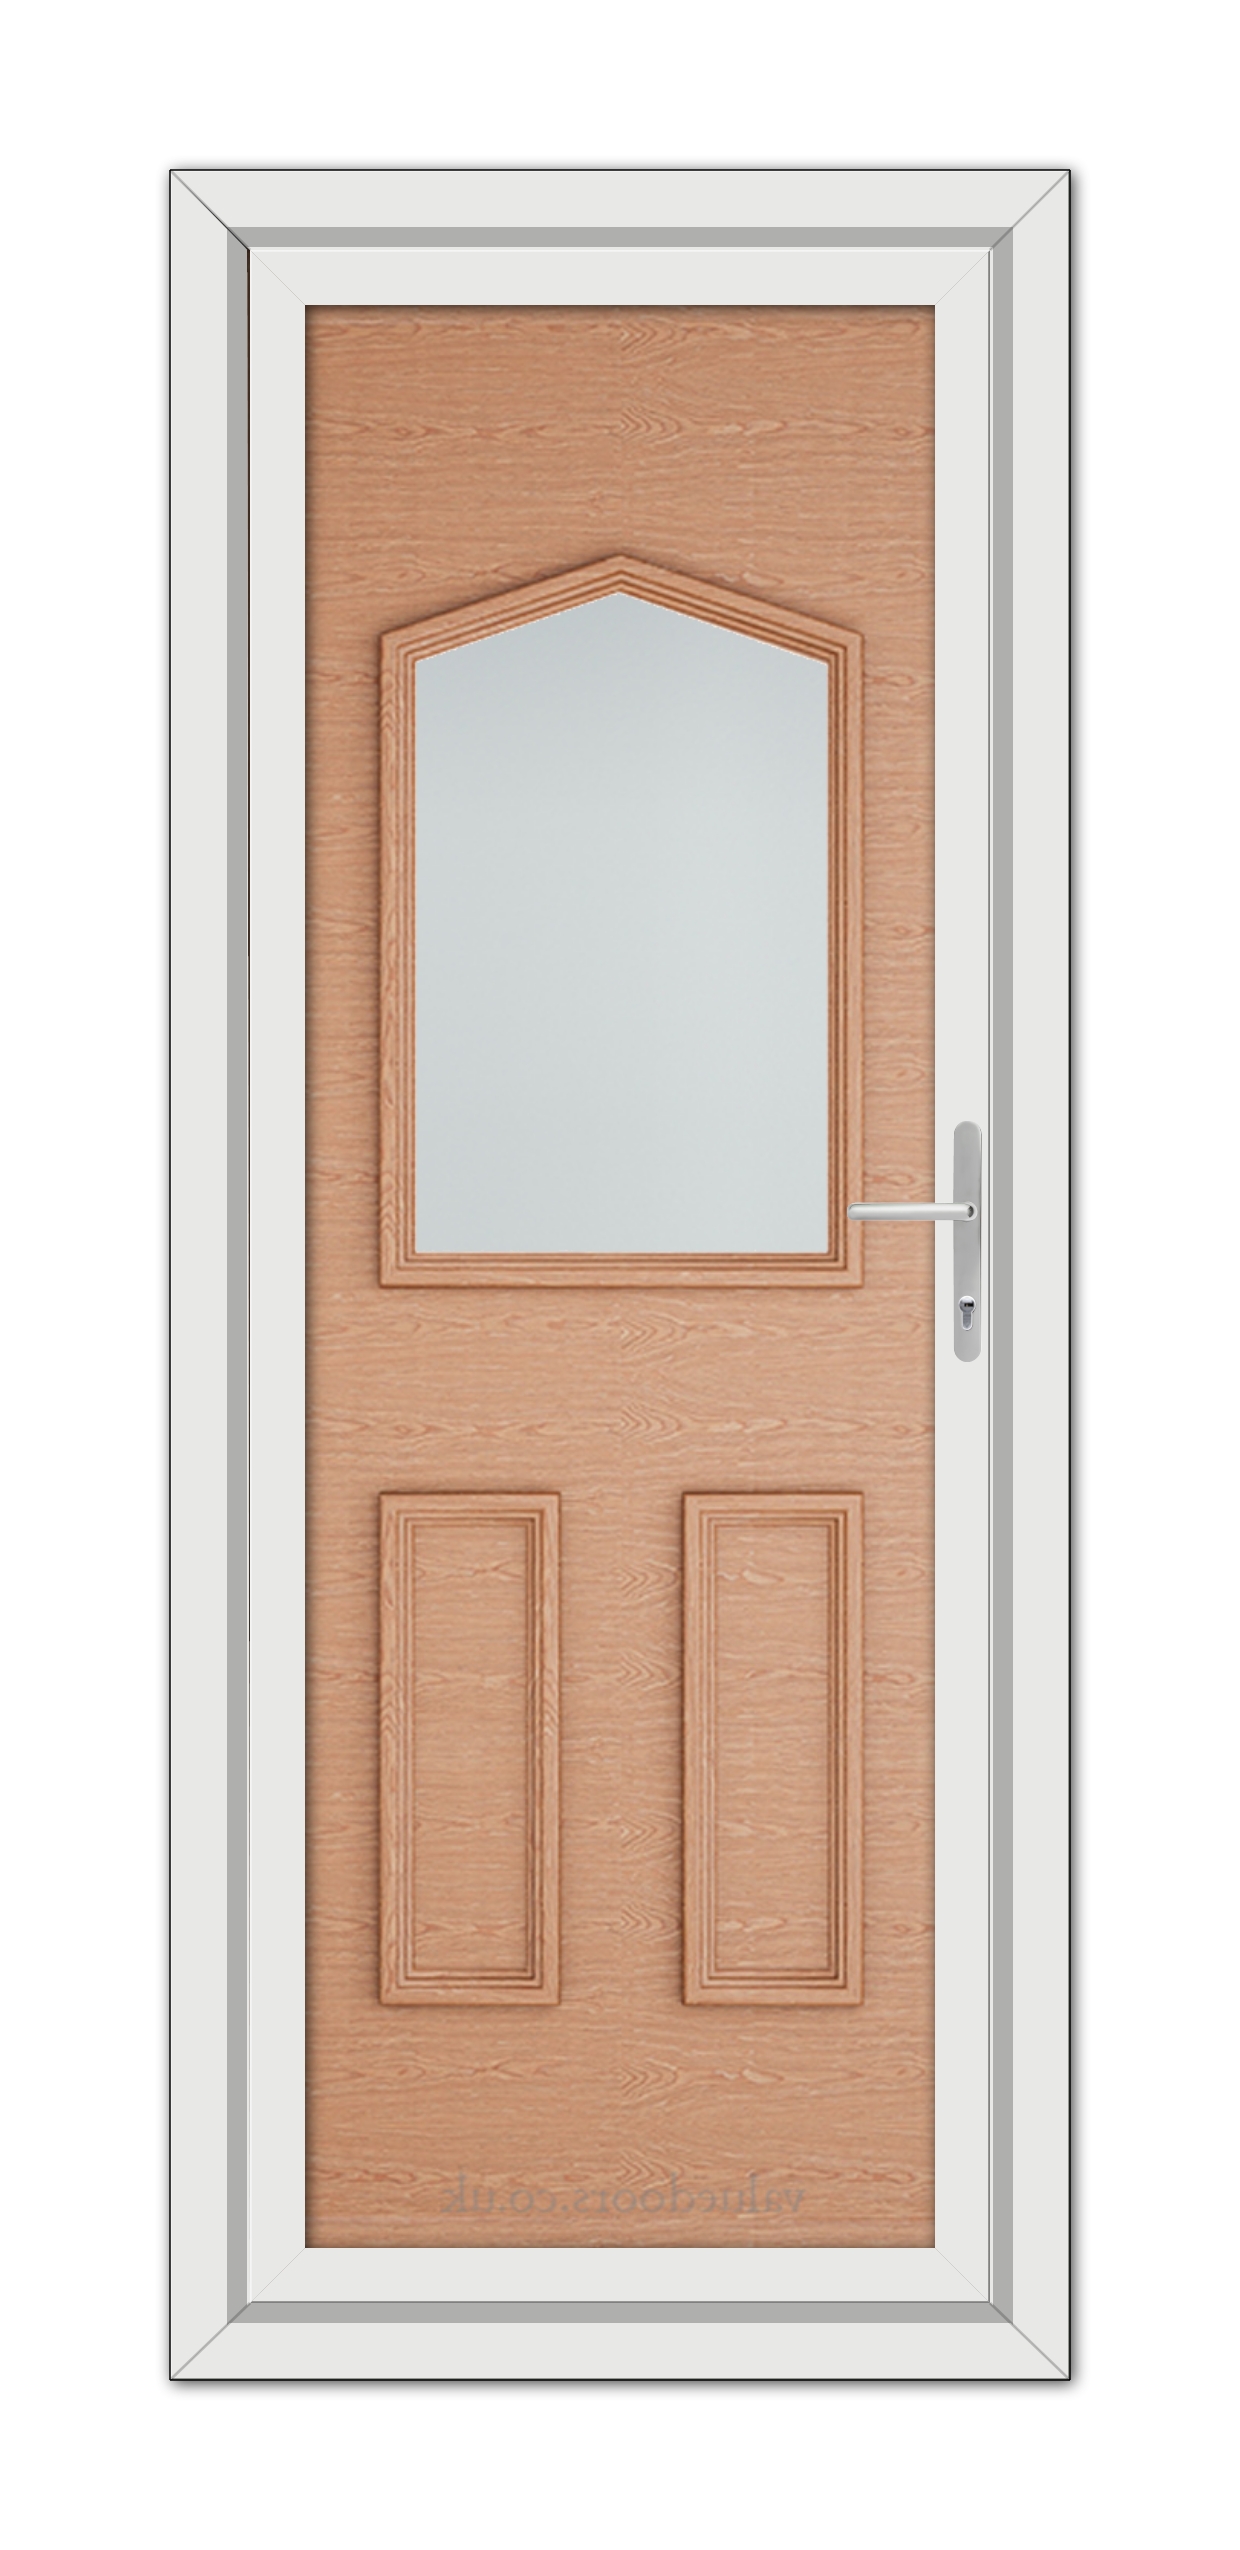 A close-up of an Irish Oak Oxford uPVC Door.